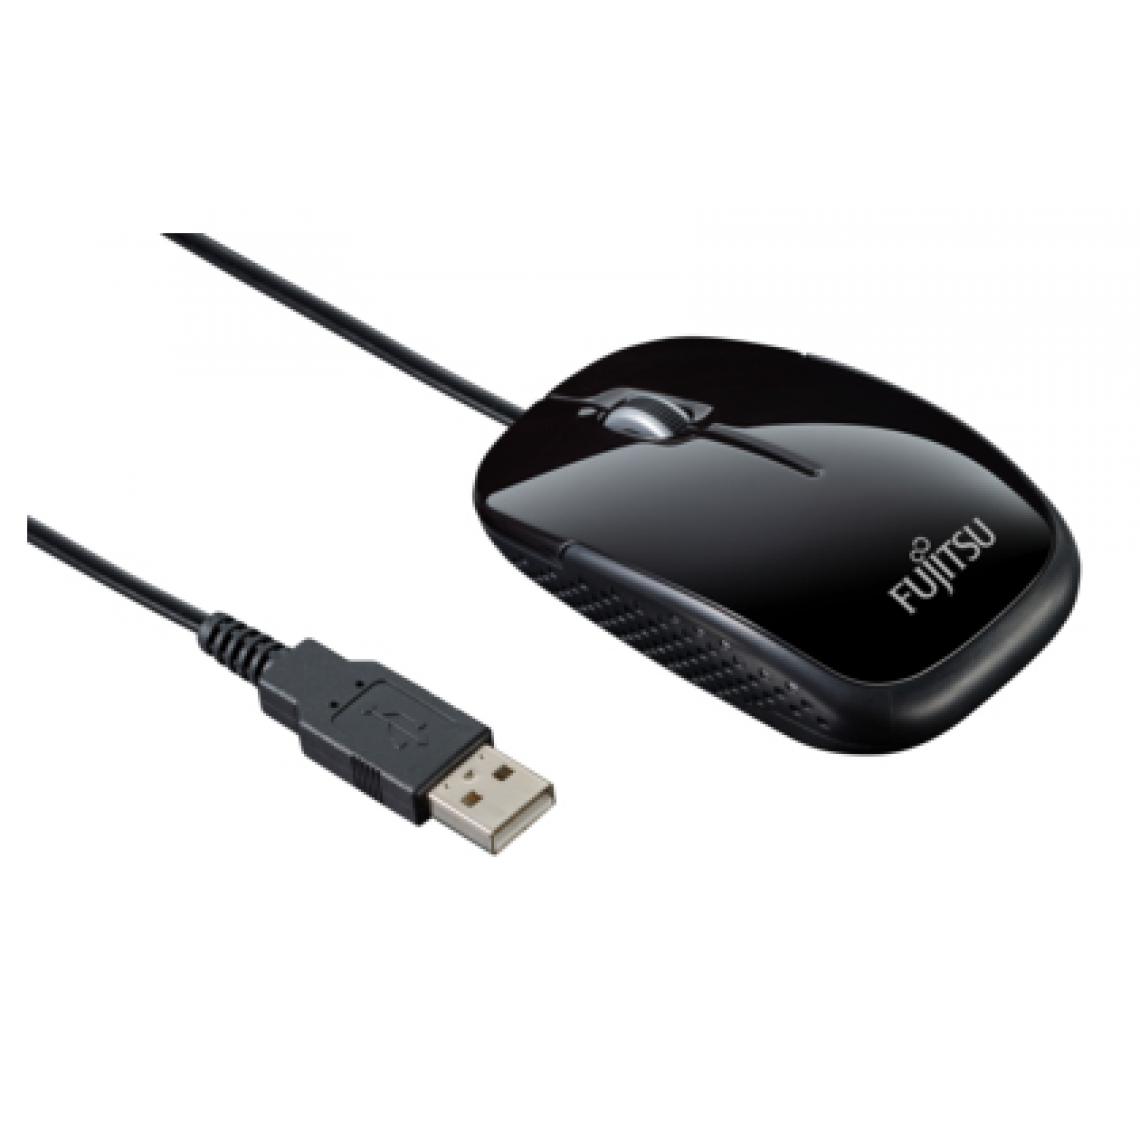 Fujitsu - USB MOUSE M420NB - Souris